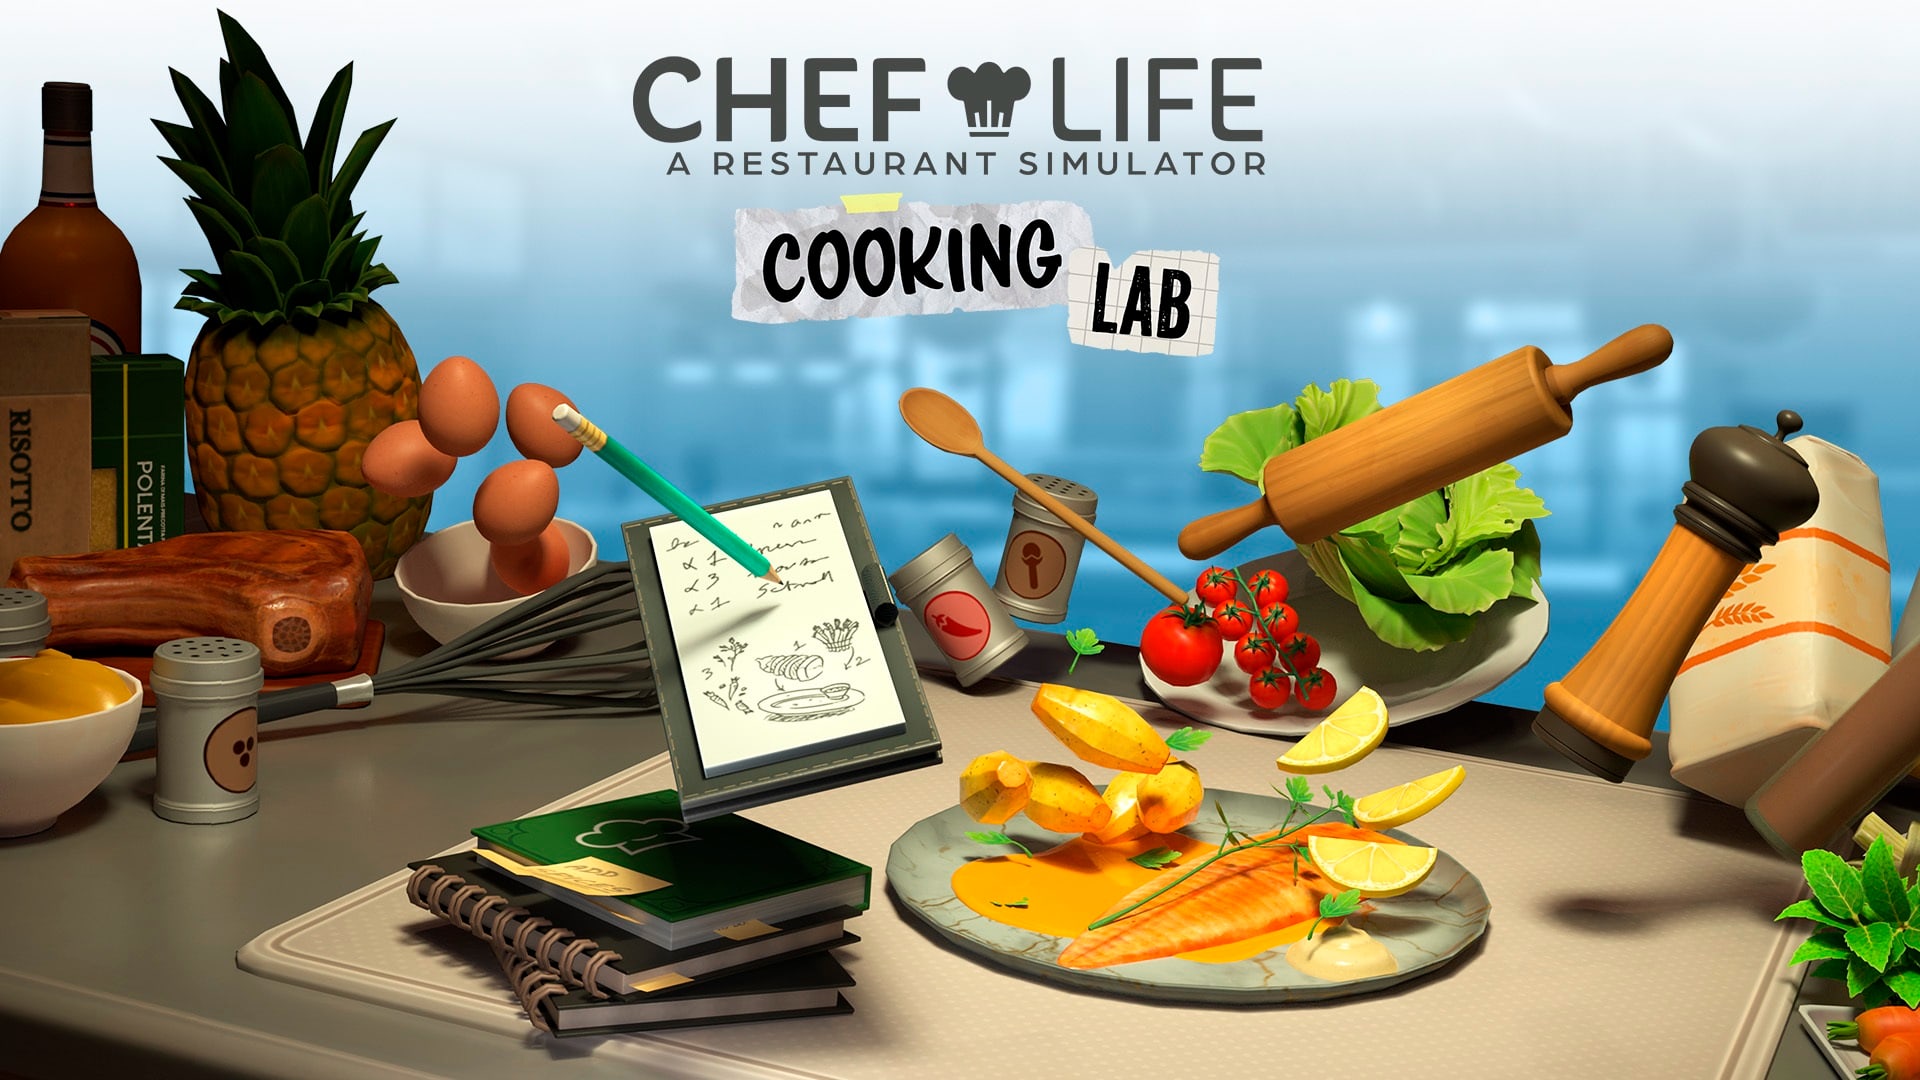 Chef Life: A Restaurant Simulator - COOKING LAB 1